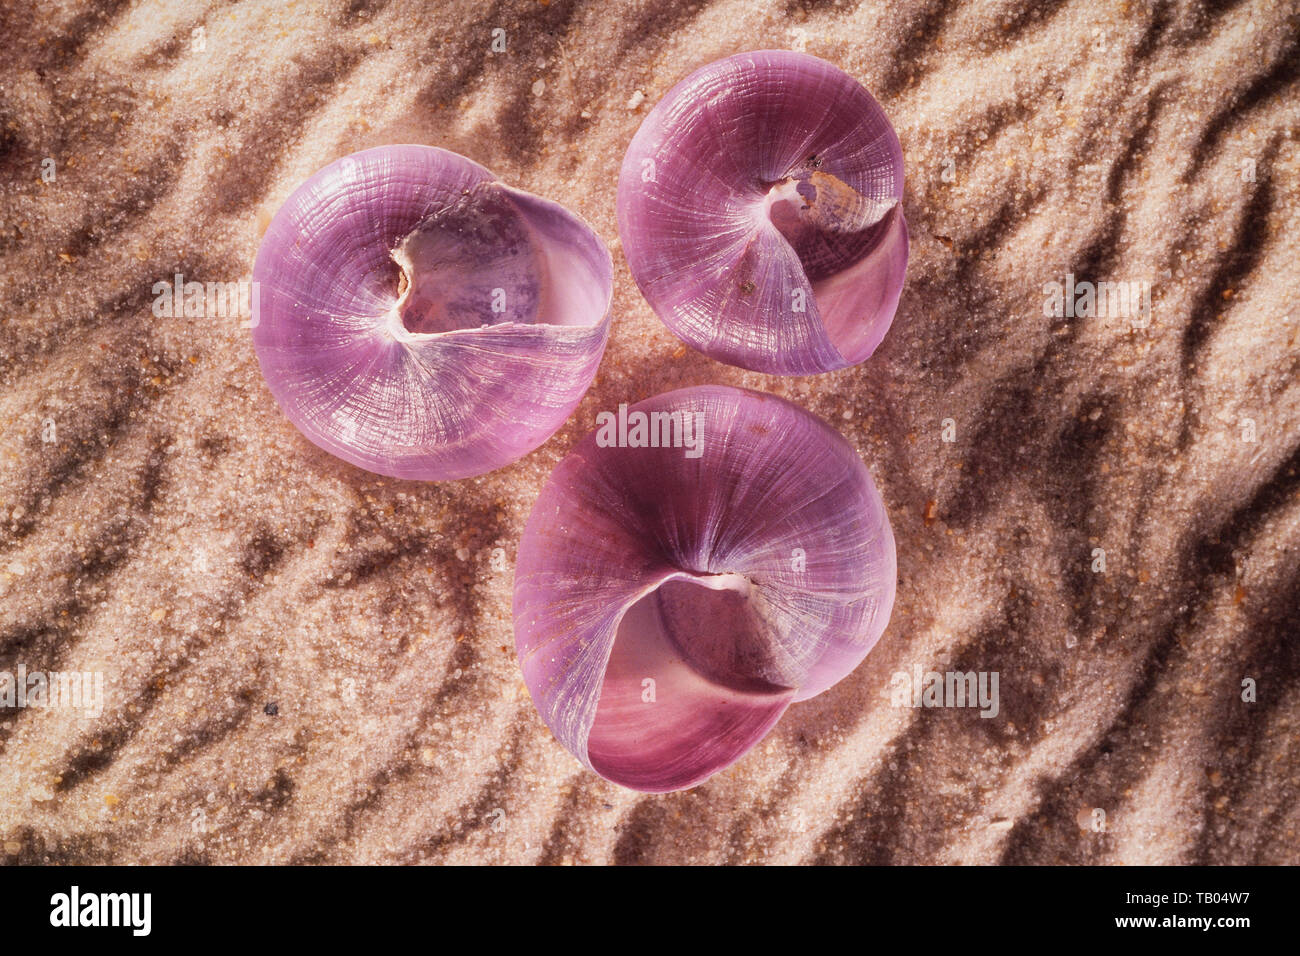 Common purple sea snail, Janthina janthina Linnaeus, on rippled sand Stock Photo